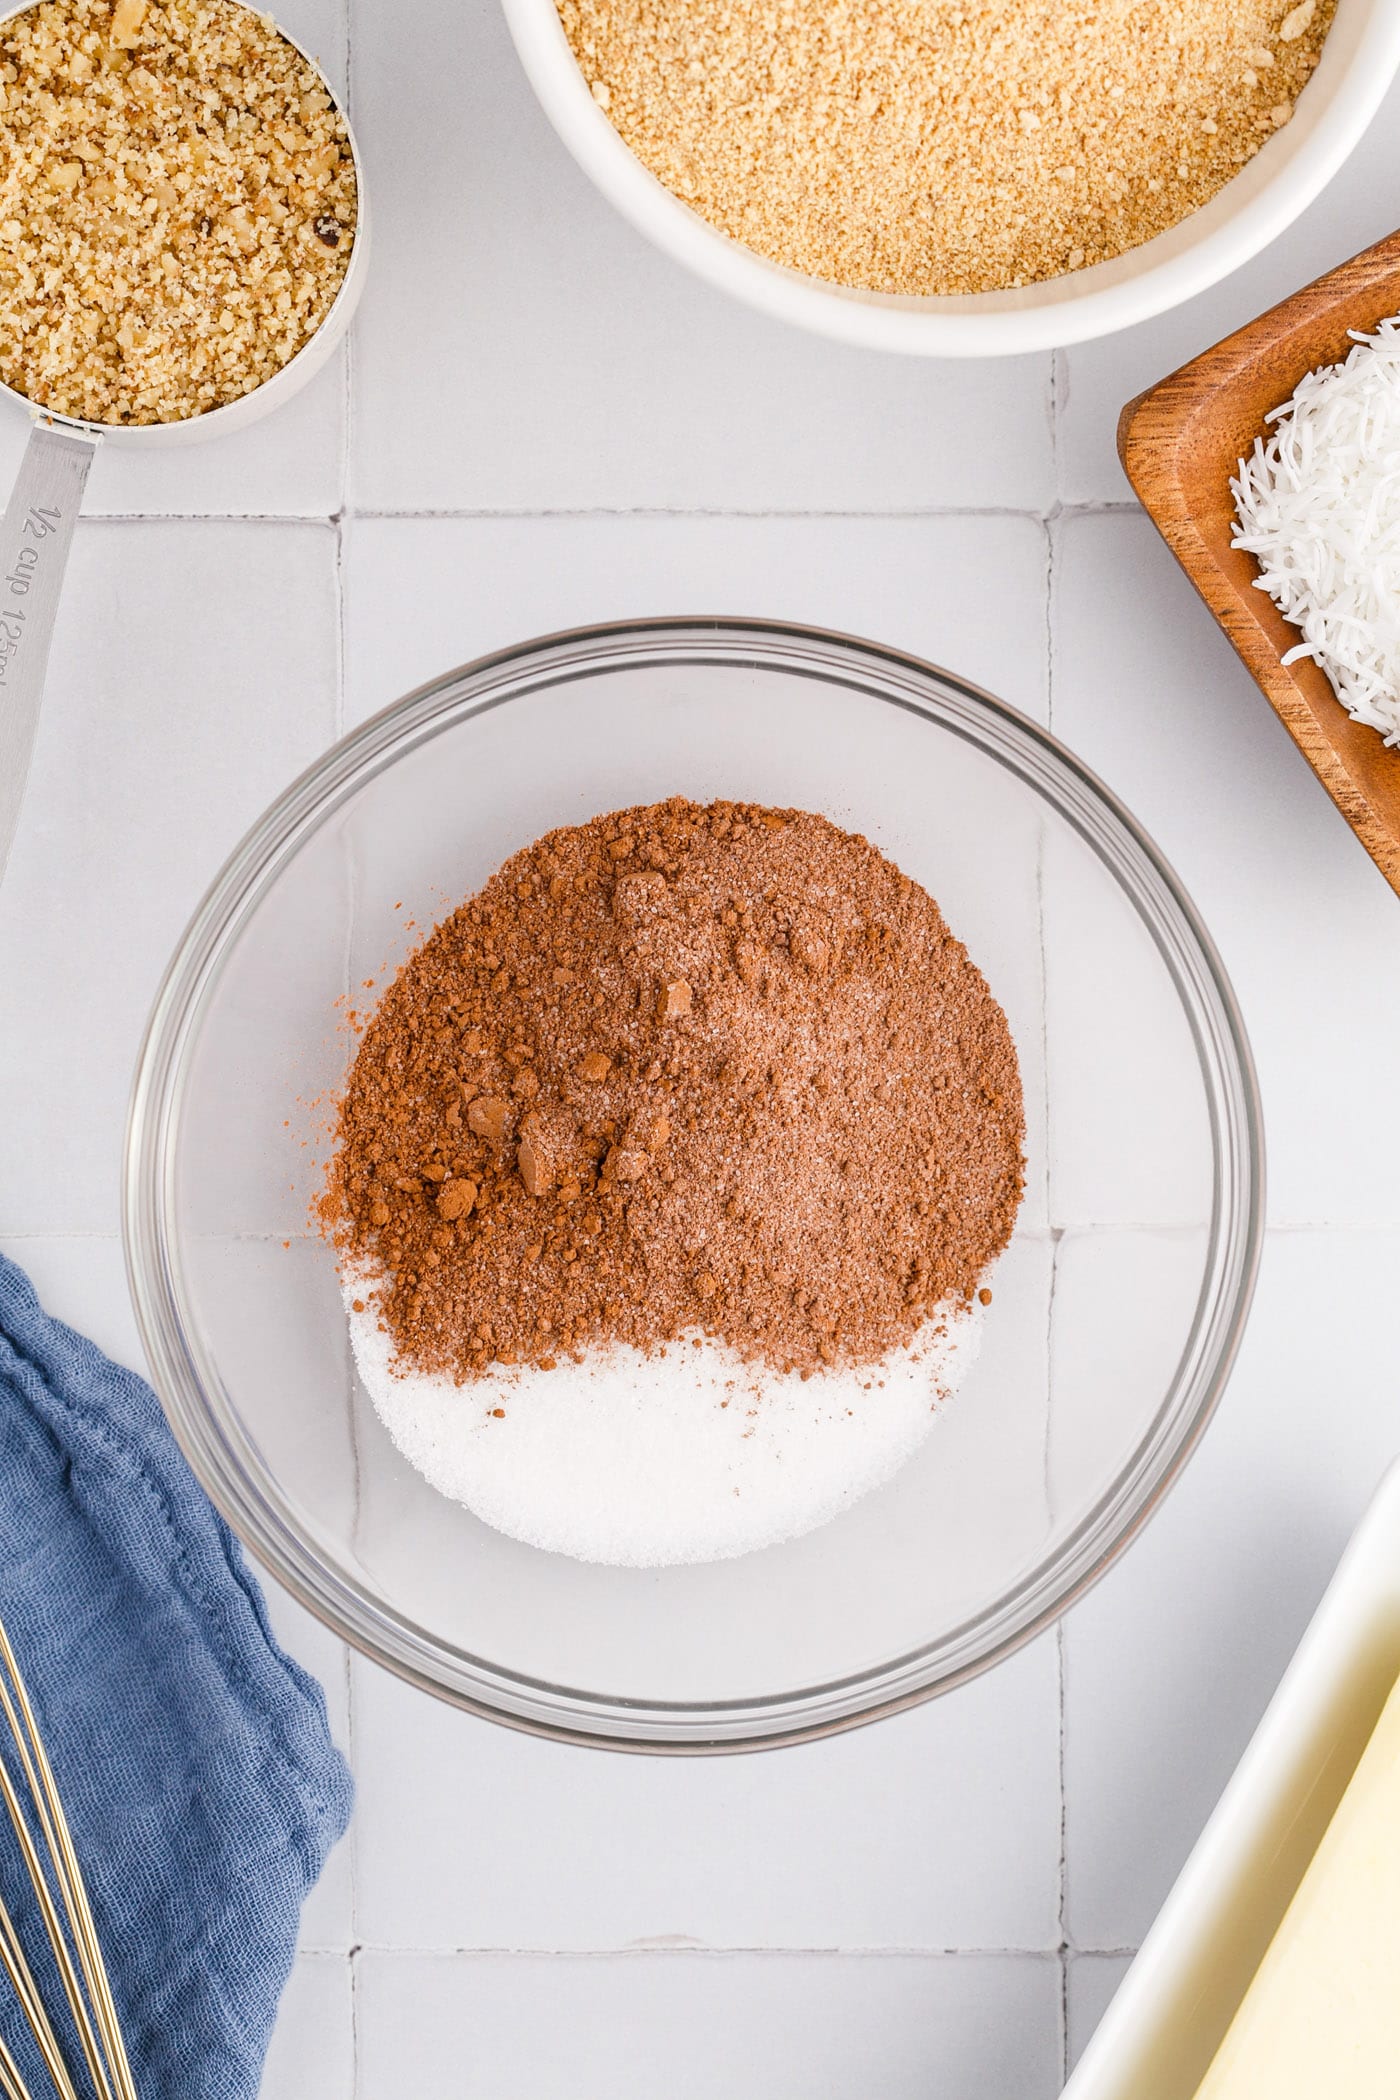 cocoa powder and sugar in a bowl